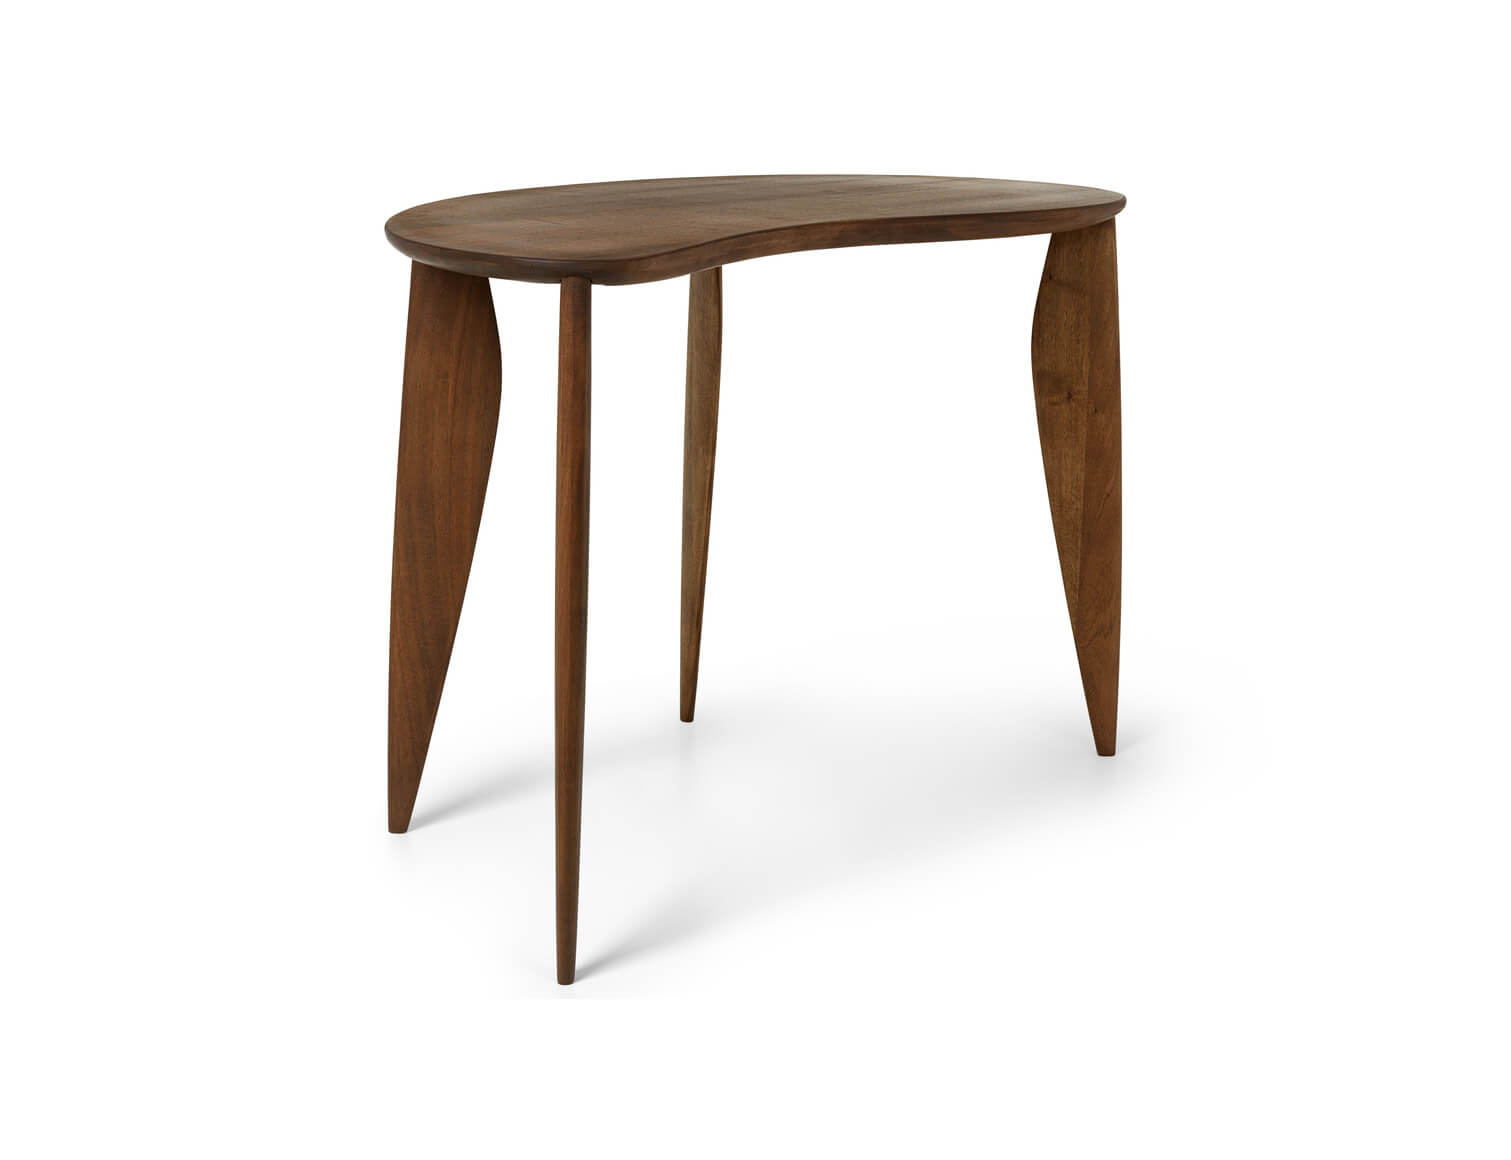 Feve Desk or Table | Walnut | by ferm Living - Lifestory - ferm LIVING